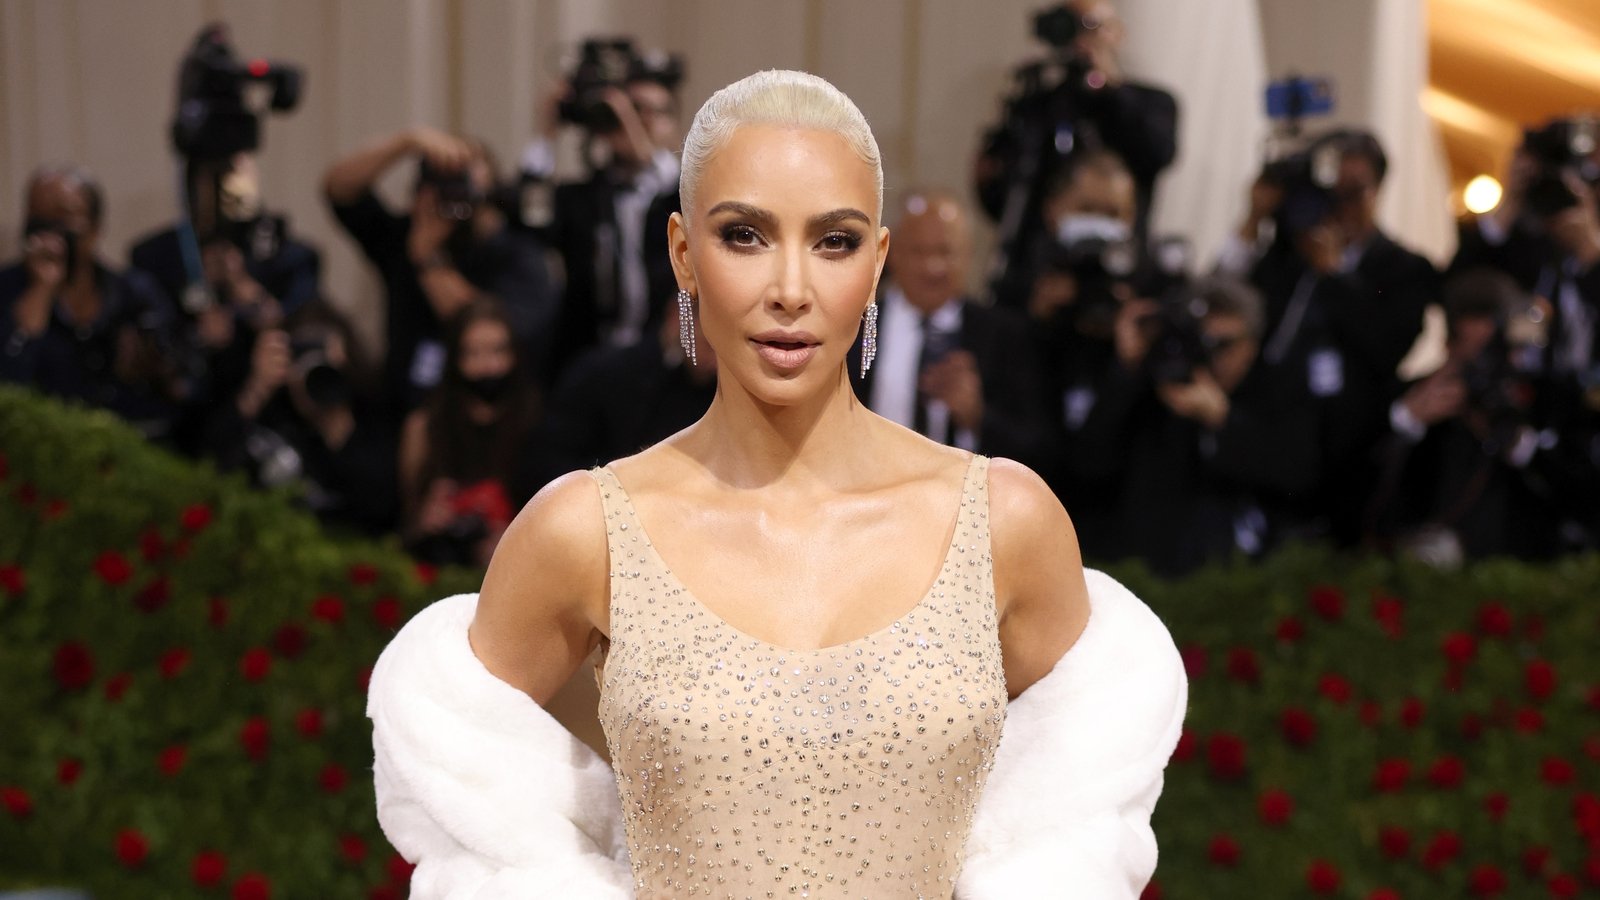 Kim Kardashian Wearing Marilyn Monroes Gown to Met Gala Clues